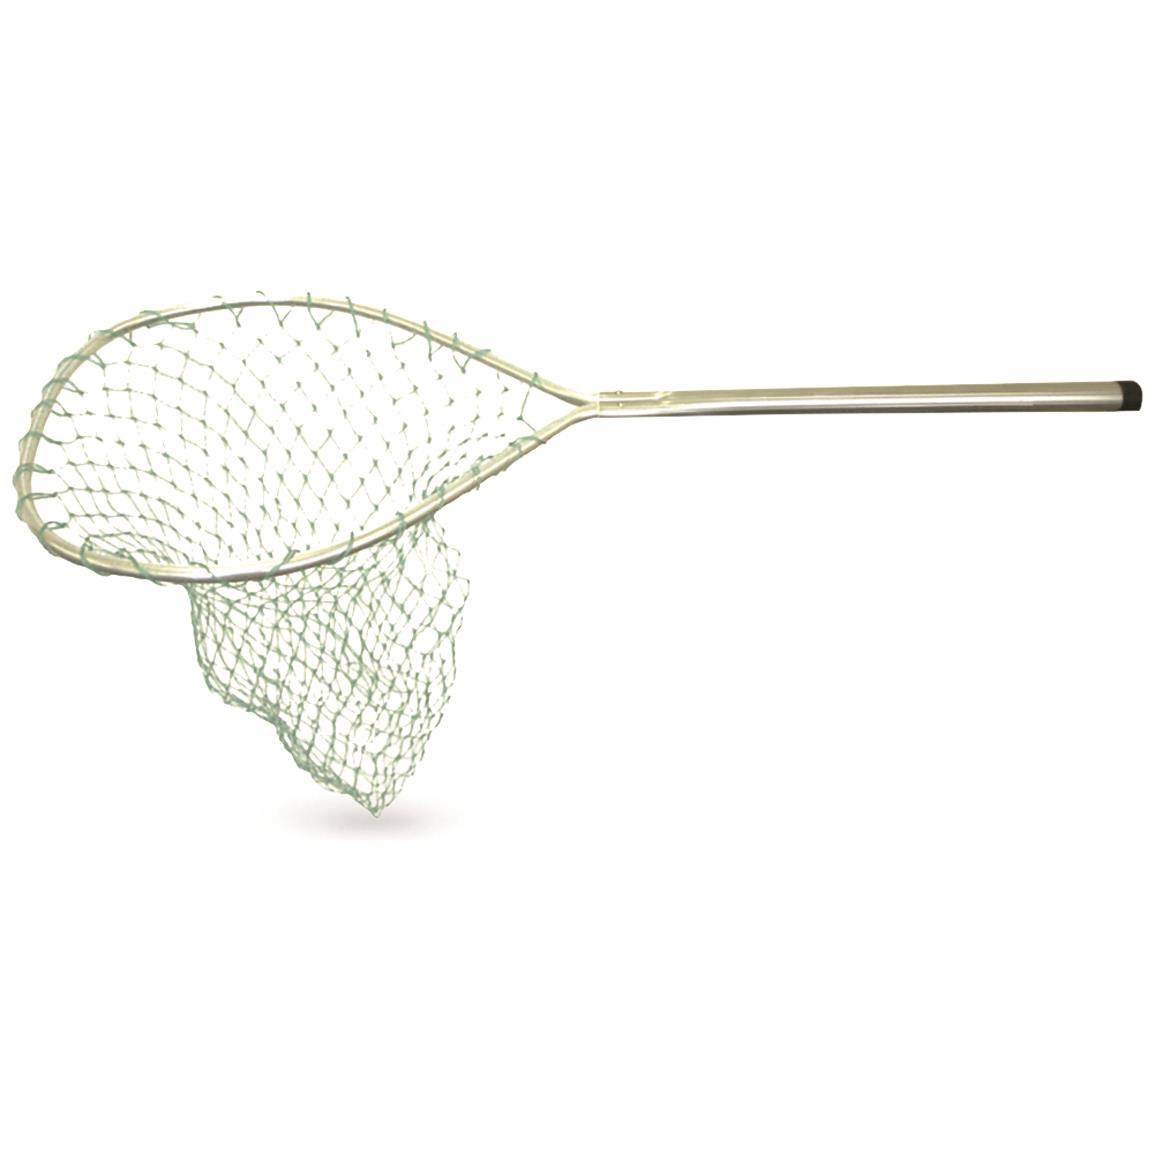 Promar Angler Series Landing Net, 15x17" Hoop, 18" Handle, Green Poly